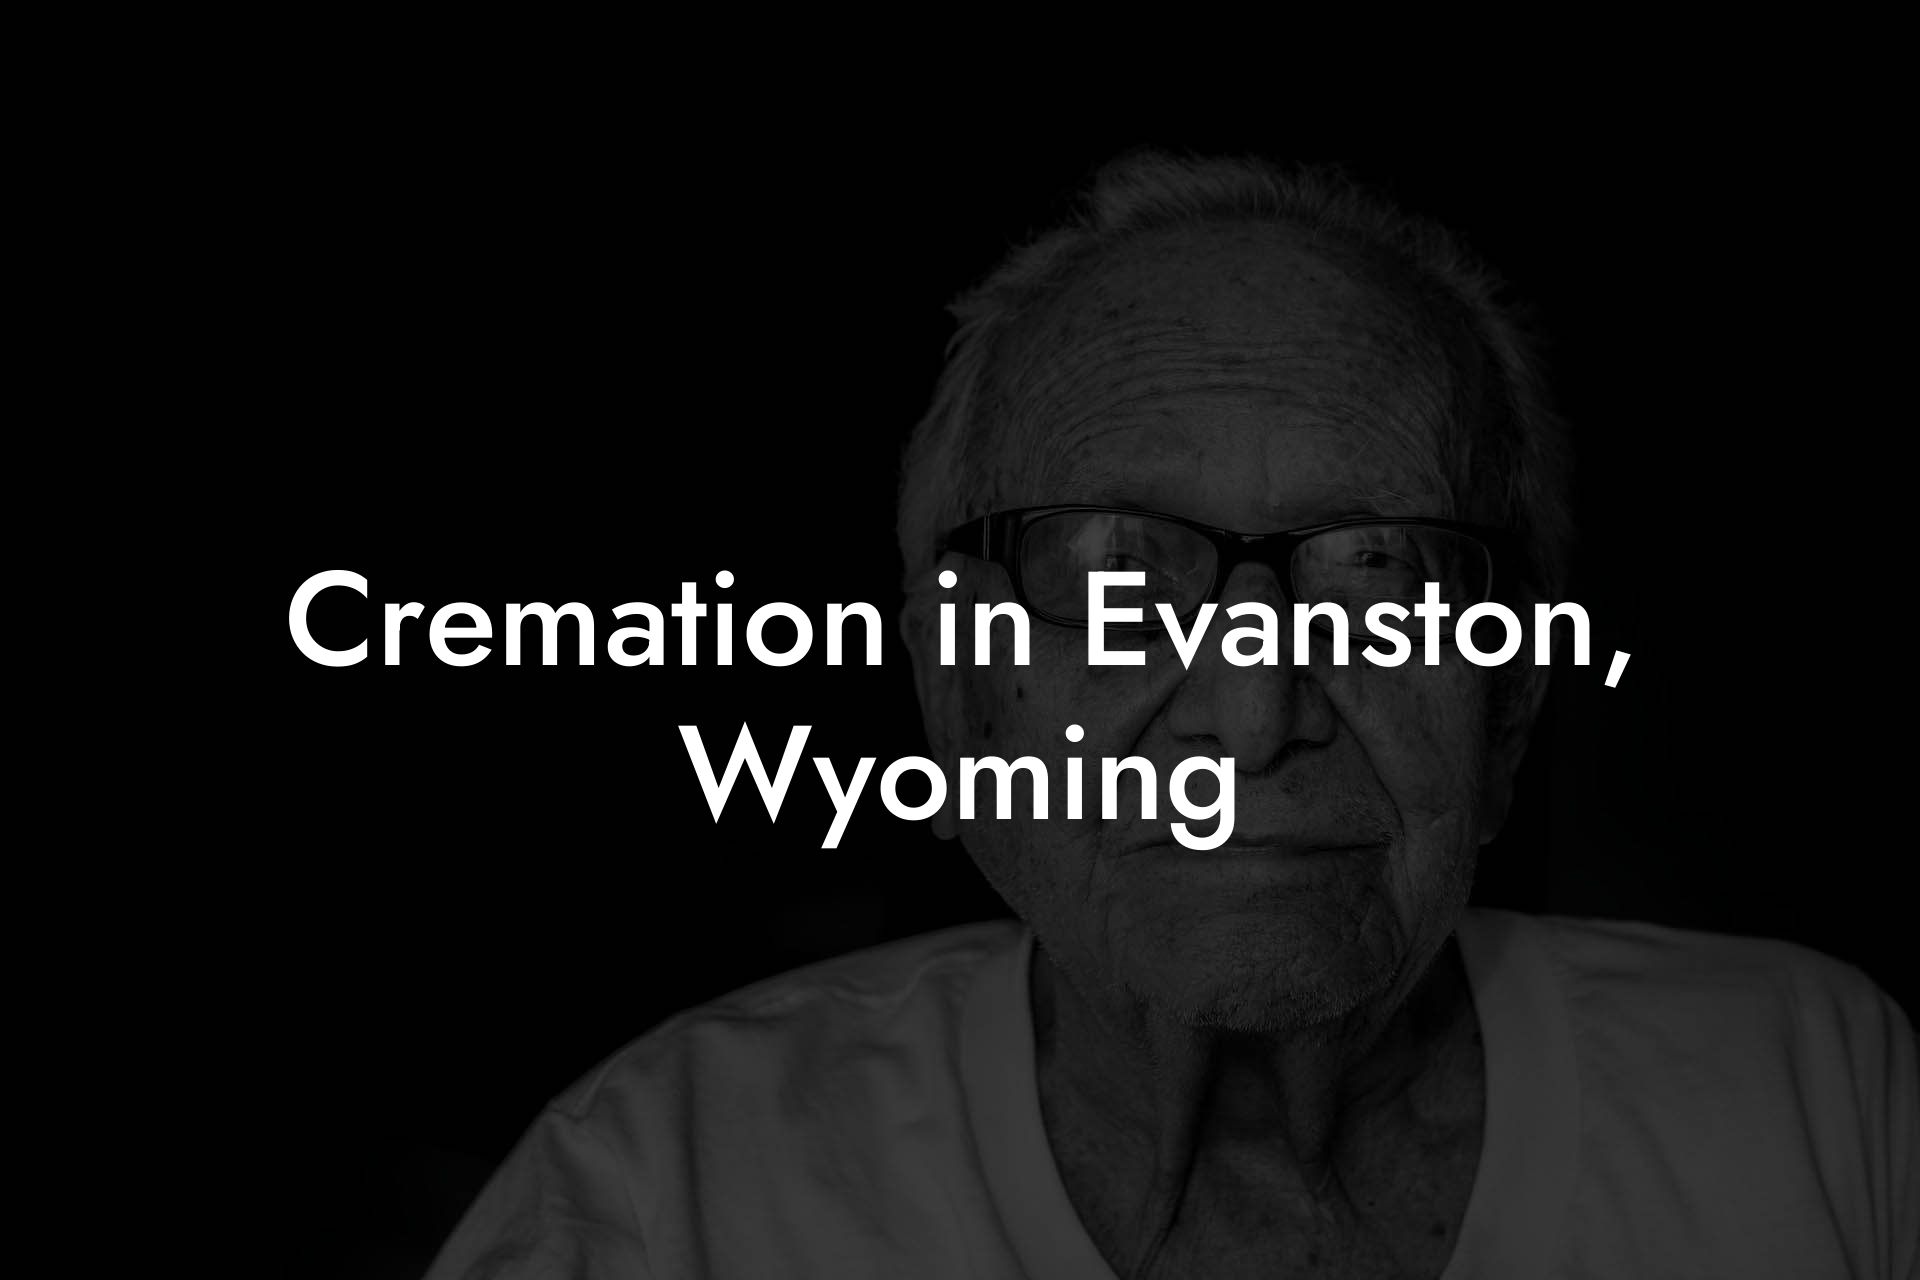 Cremation in Evanston, Wyoming